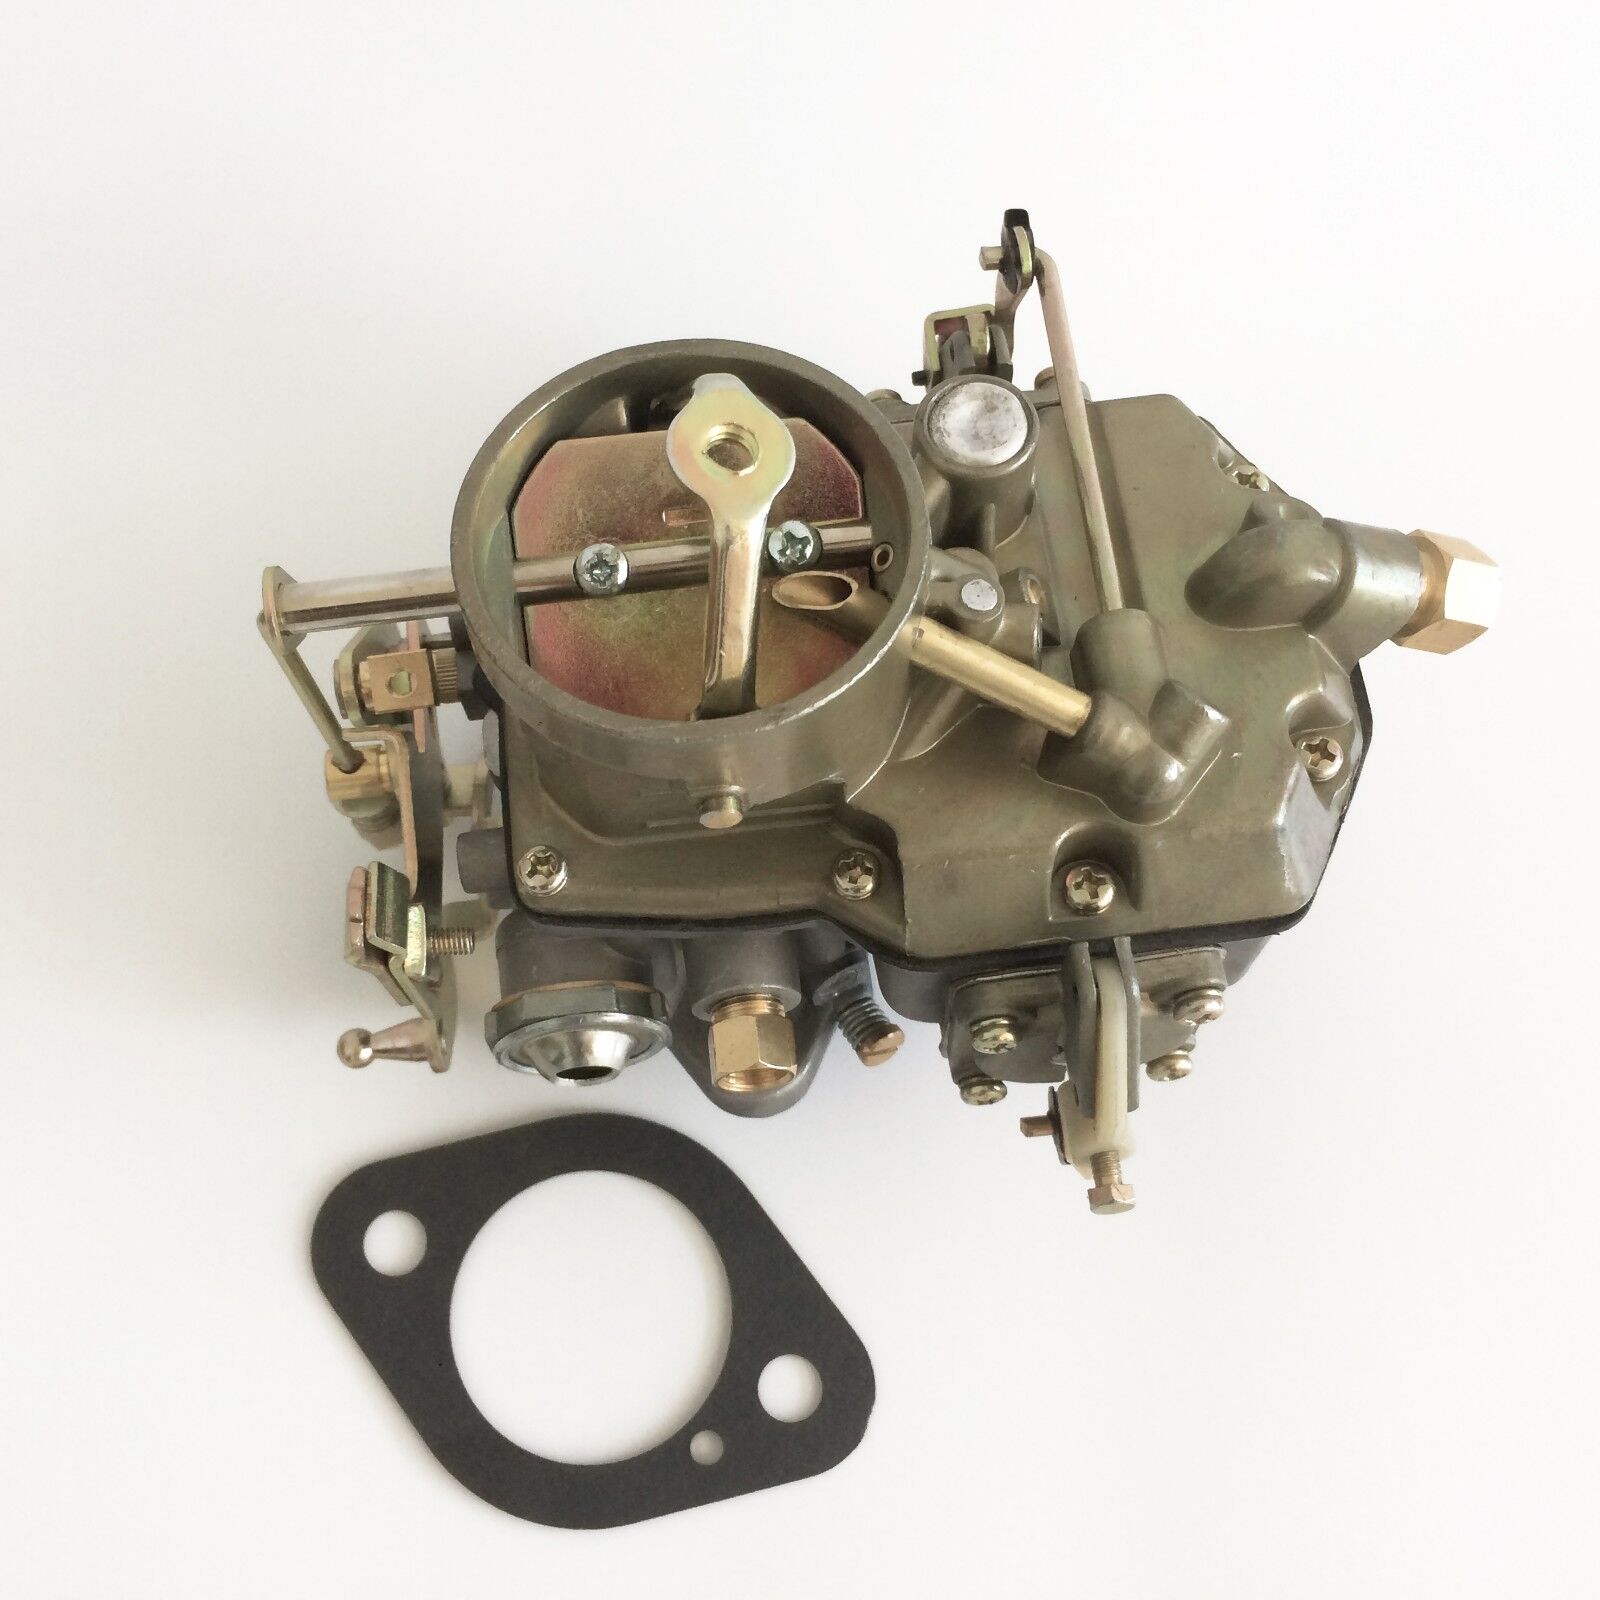 For 1963-68 FORD Trucks Autolite 1100 Carburetor manual Choke 223&262 cid engine